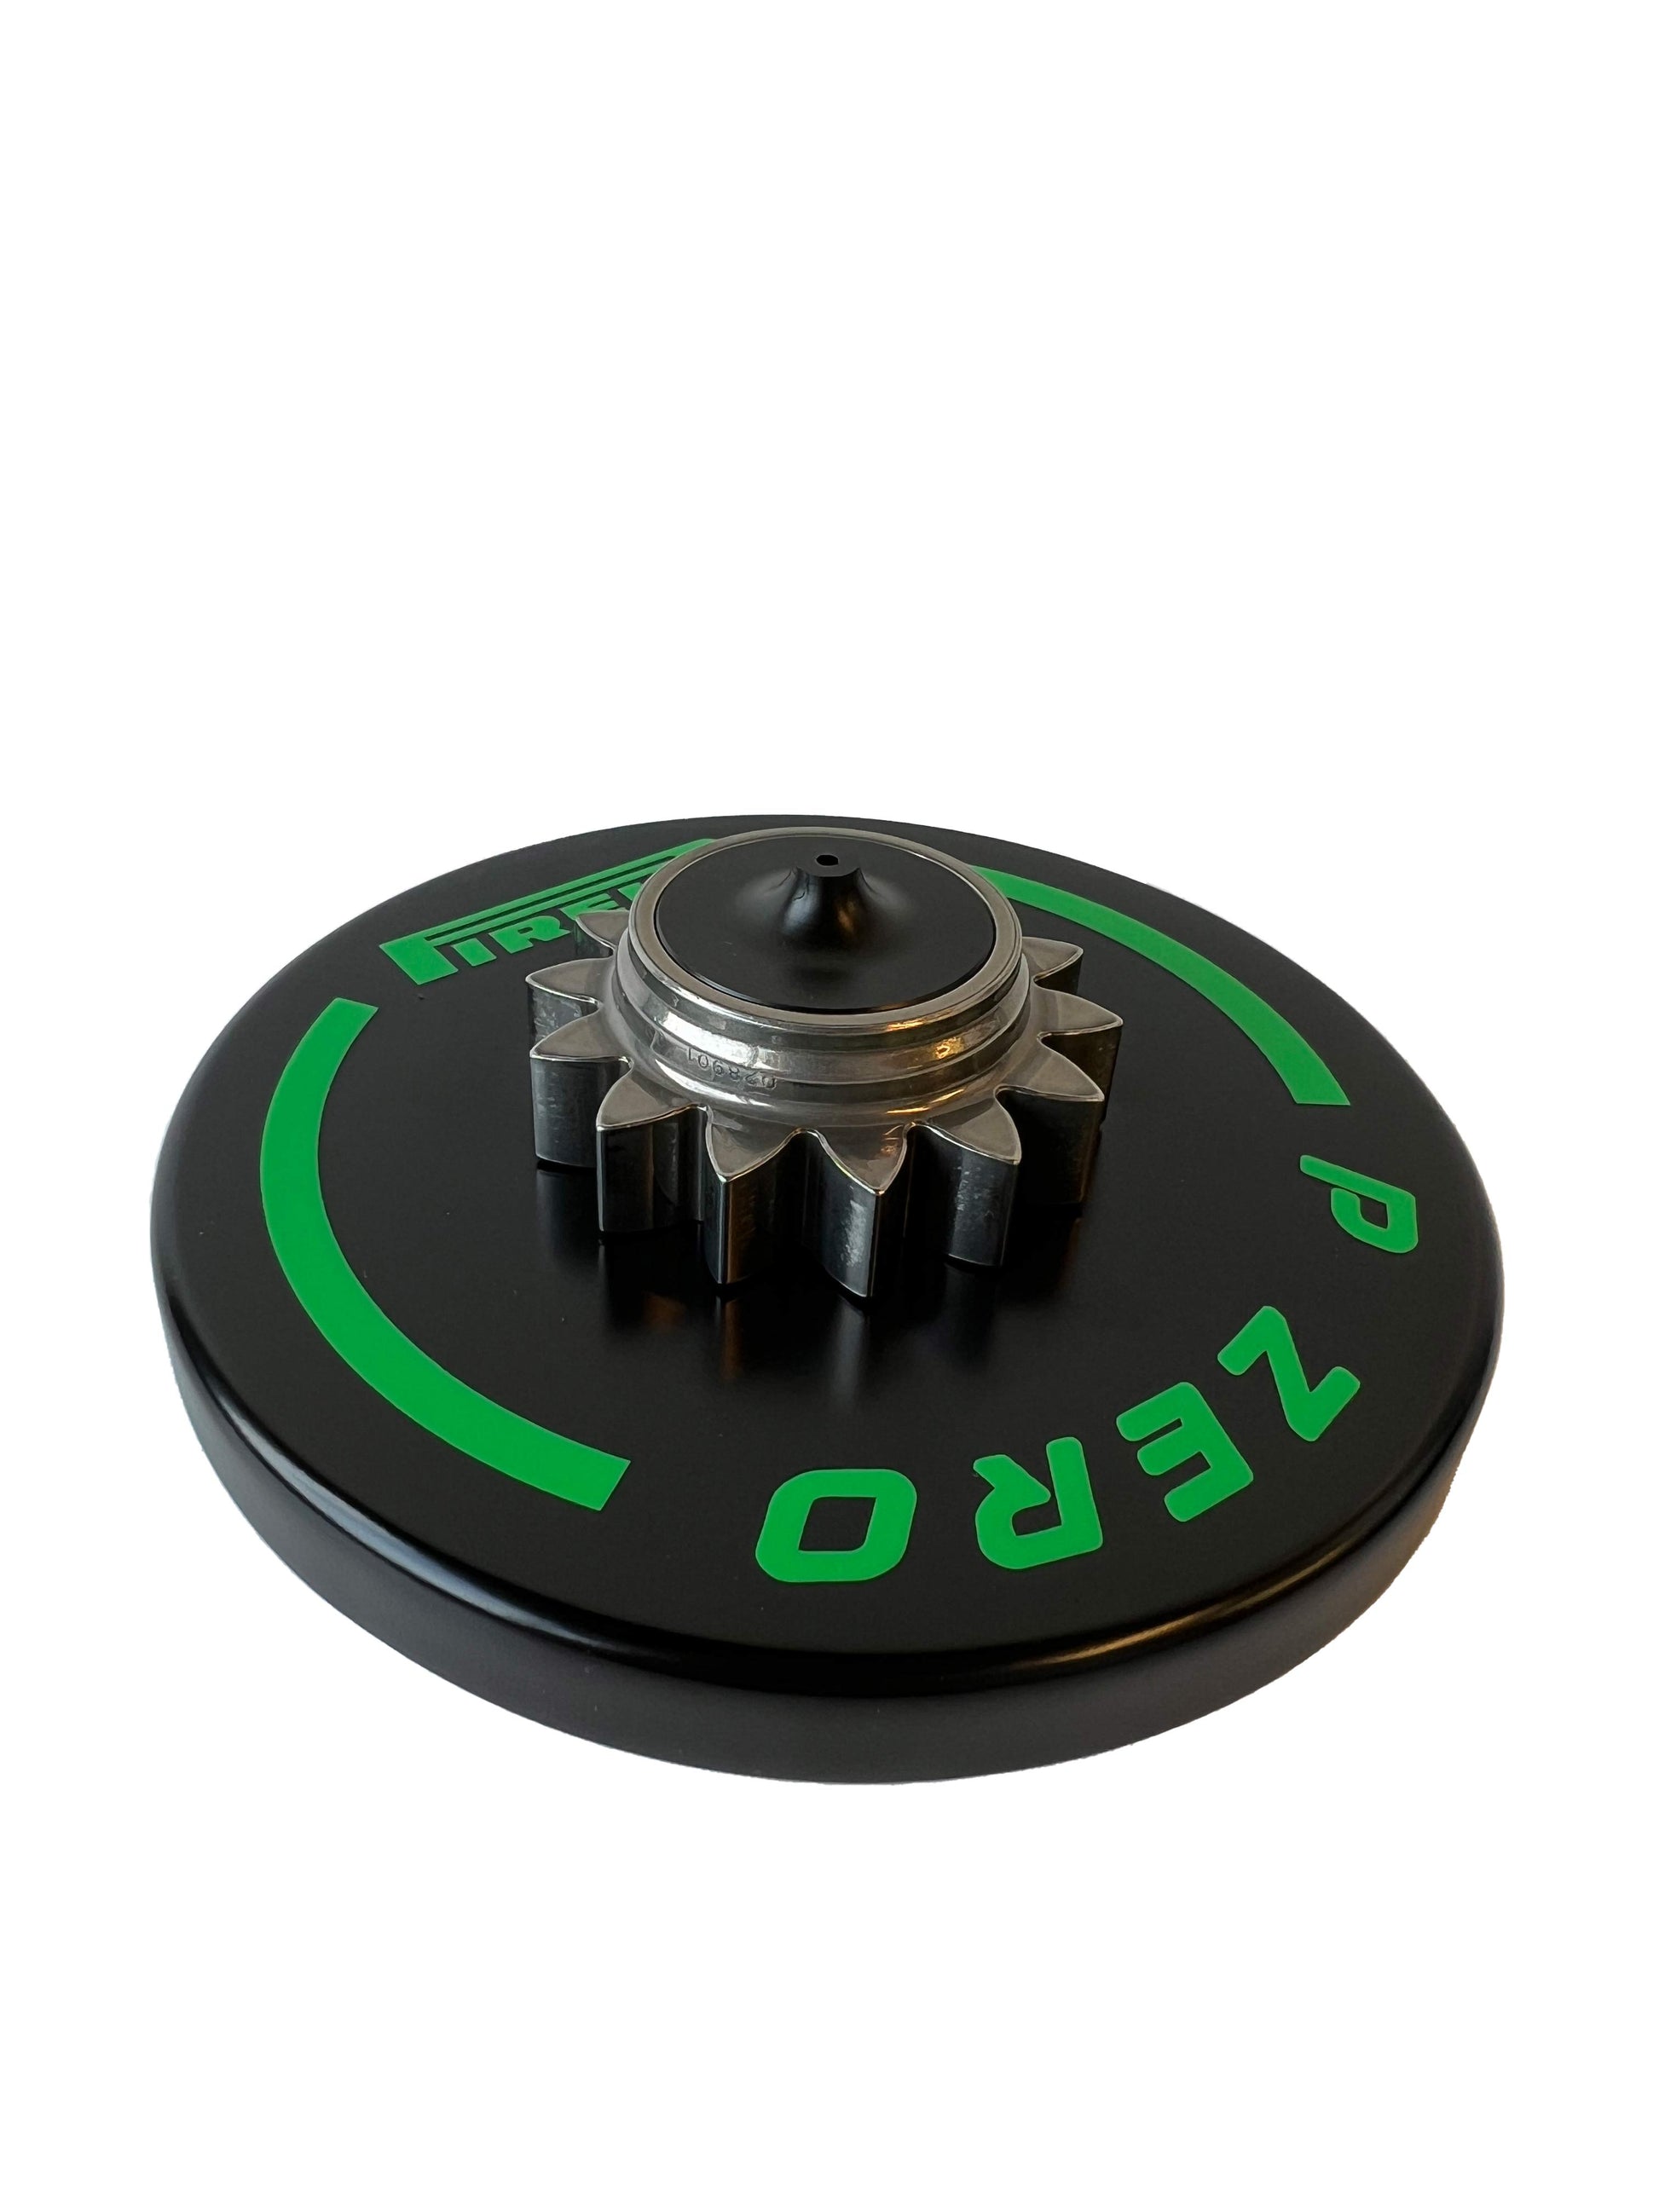 Black base with F1 gear and green Pirelli logo